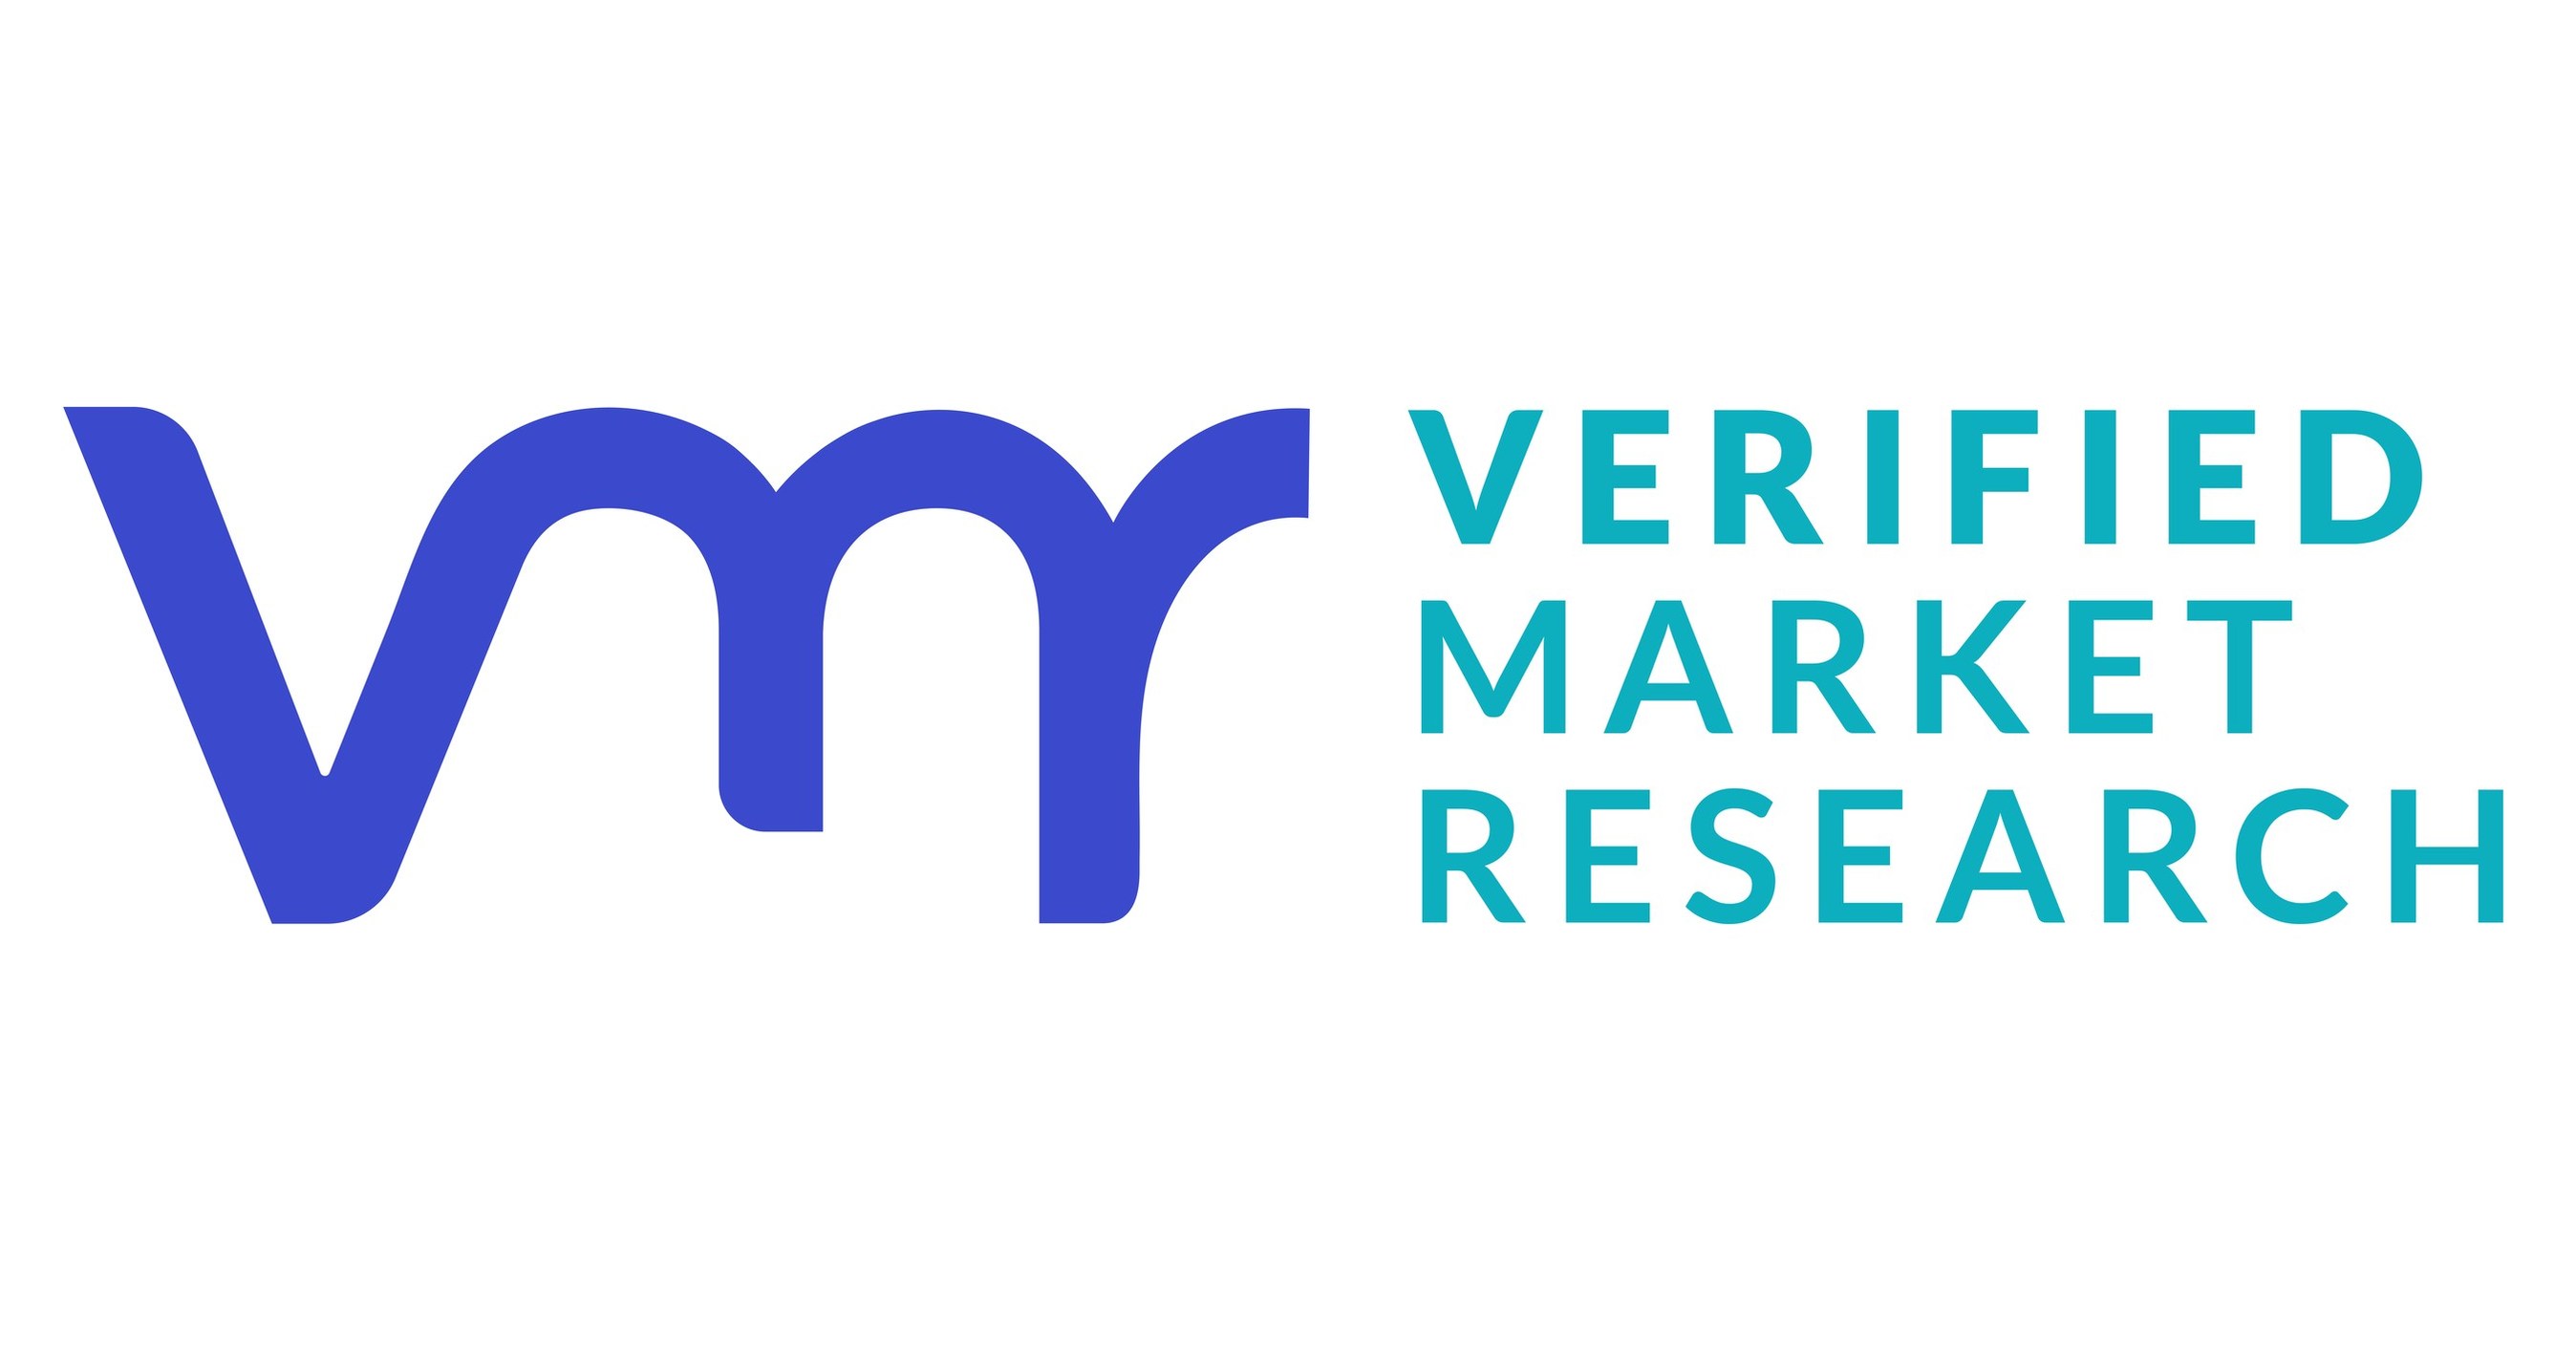 Metaverse Market size worth $ 824.53 Billion, Globally, by 2030 at 39.1% CAGR: Verified Market Research® - PR Newswire